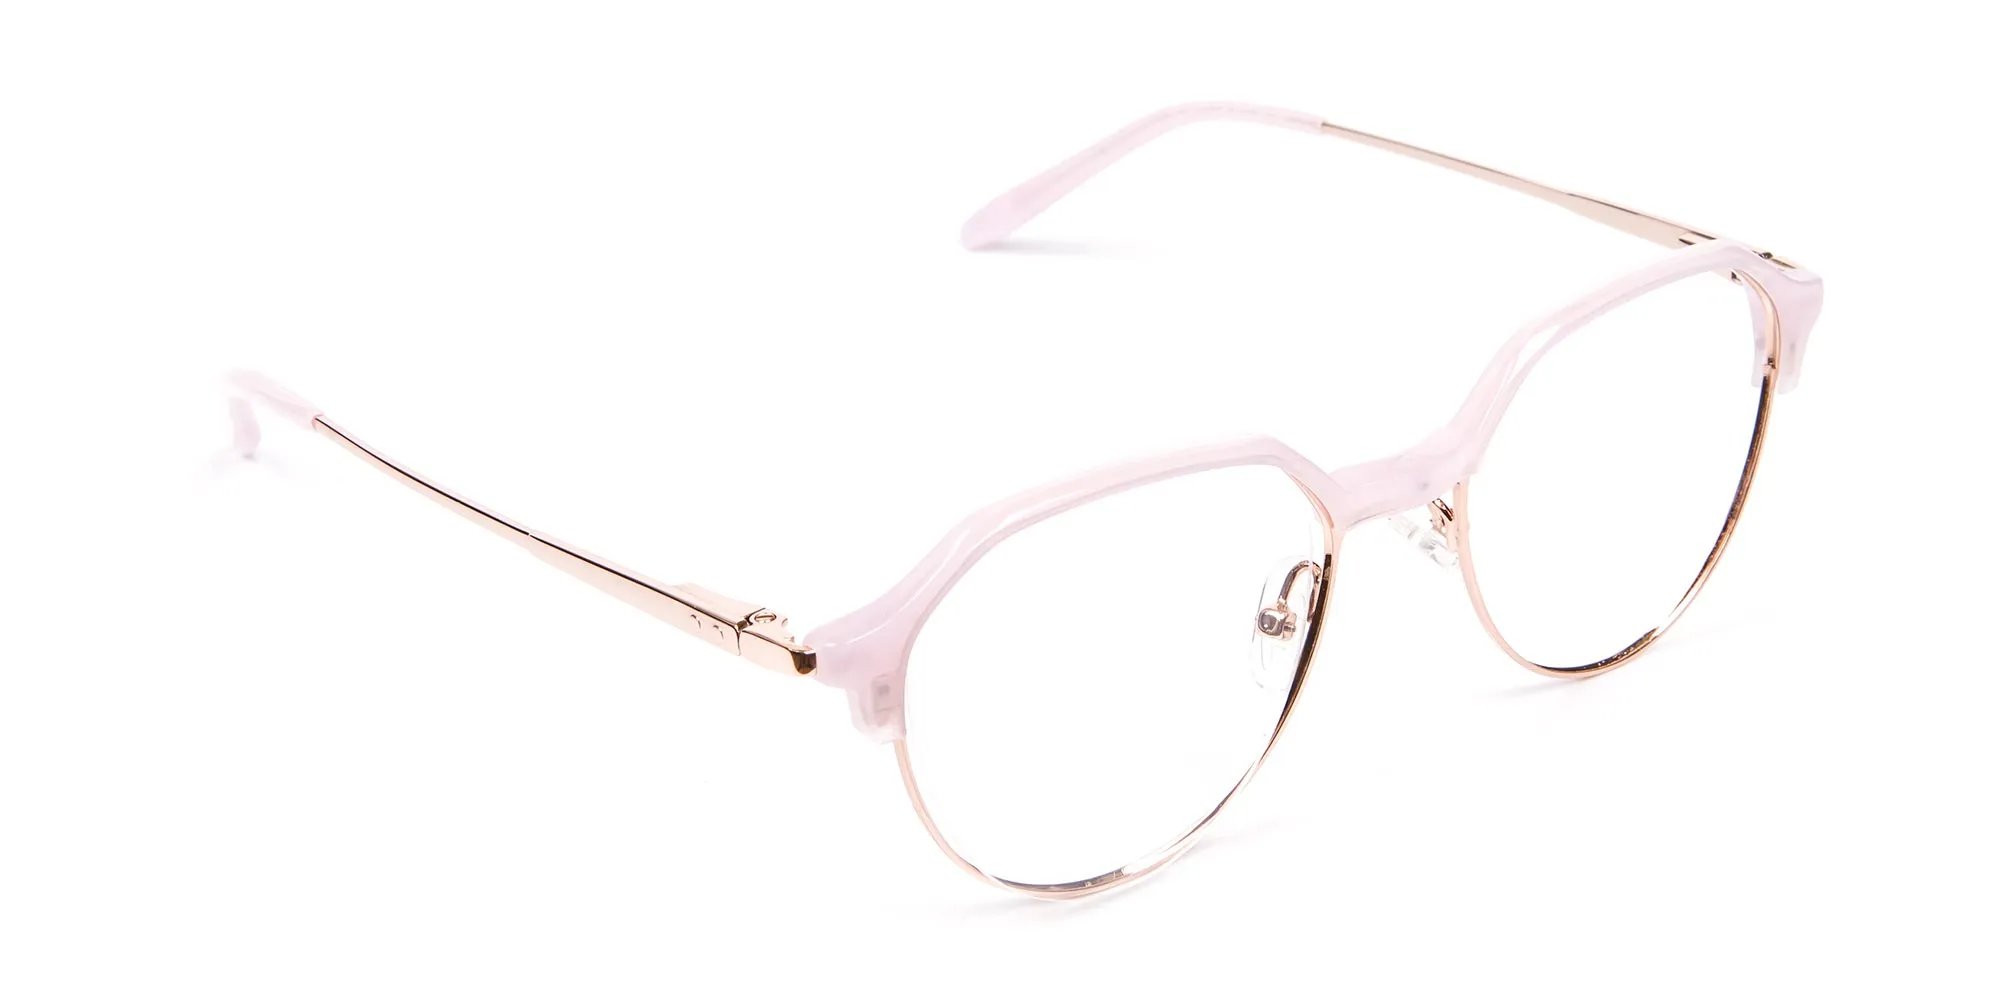 Fantasy Rosy Octagonal Glasses - 2